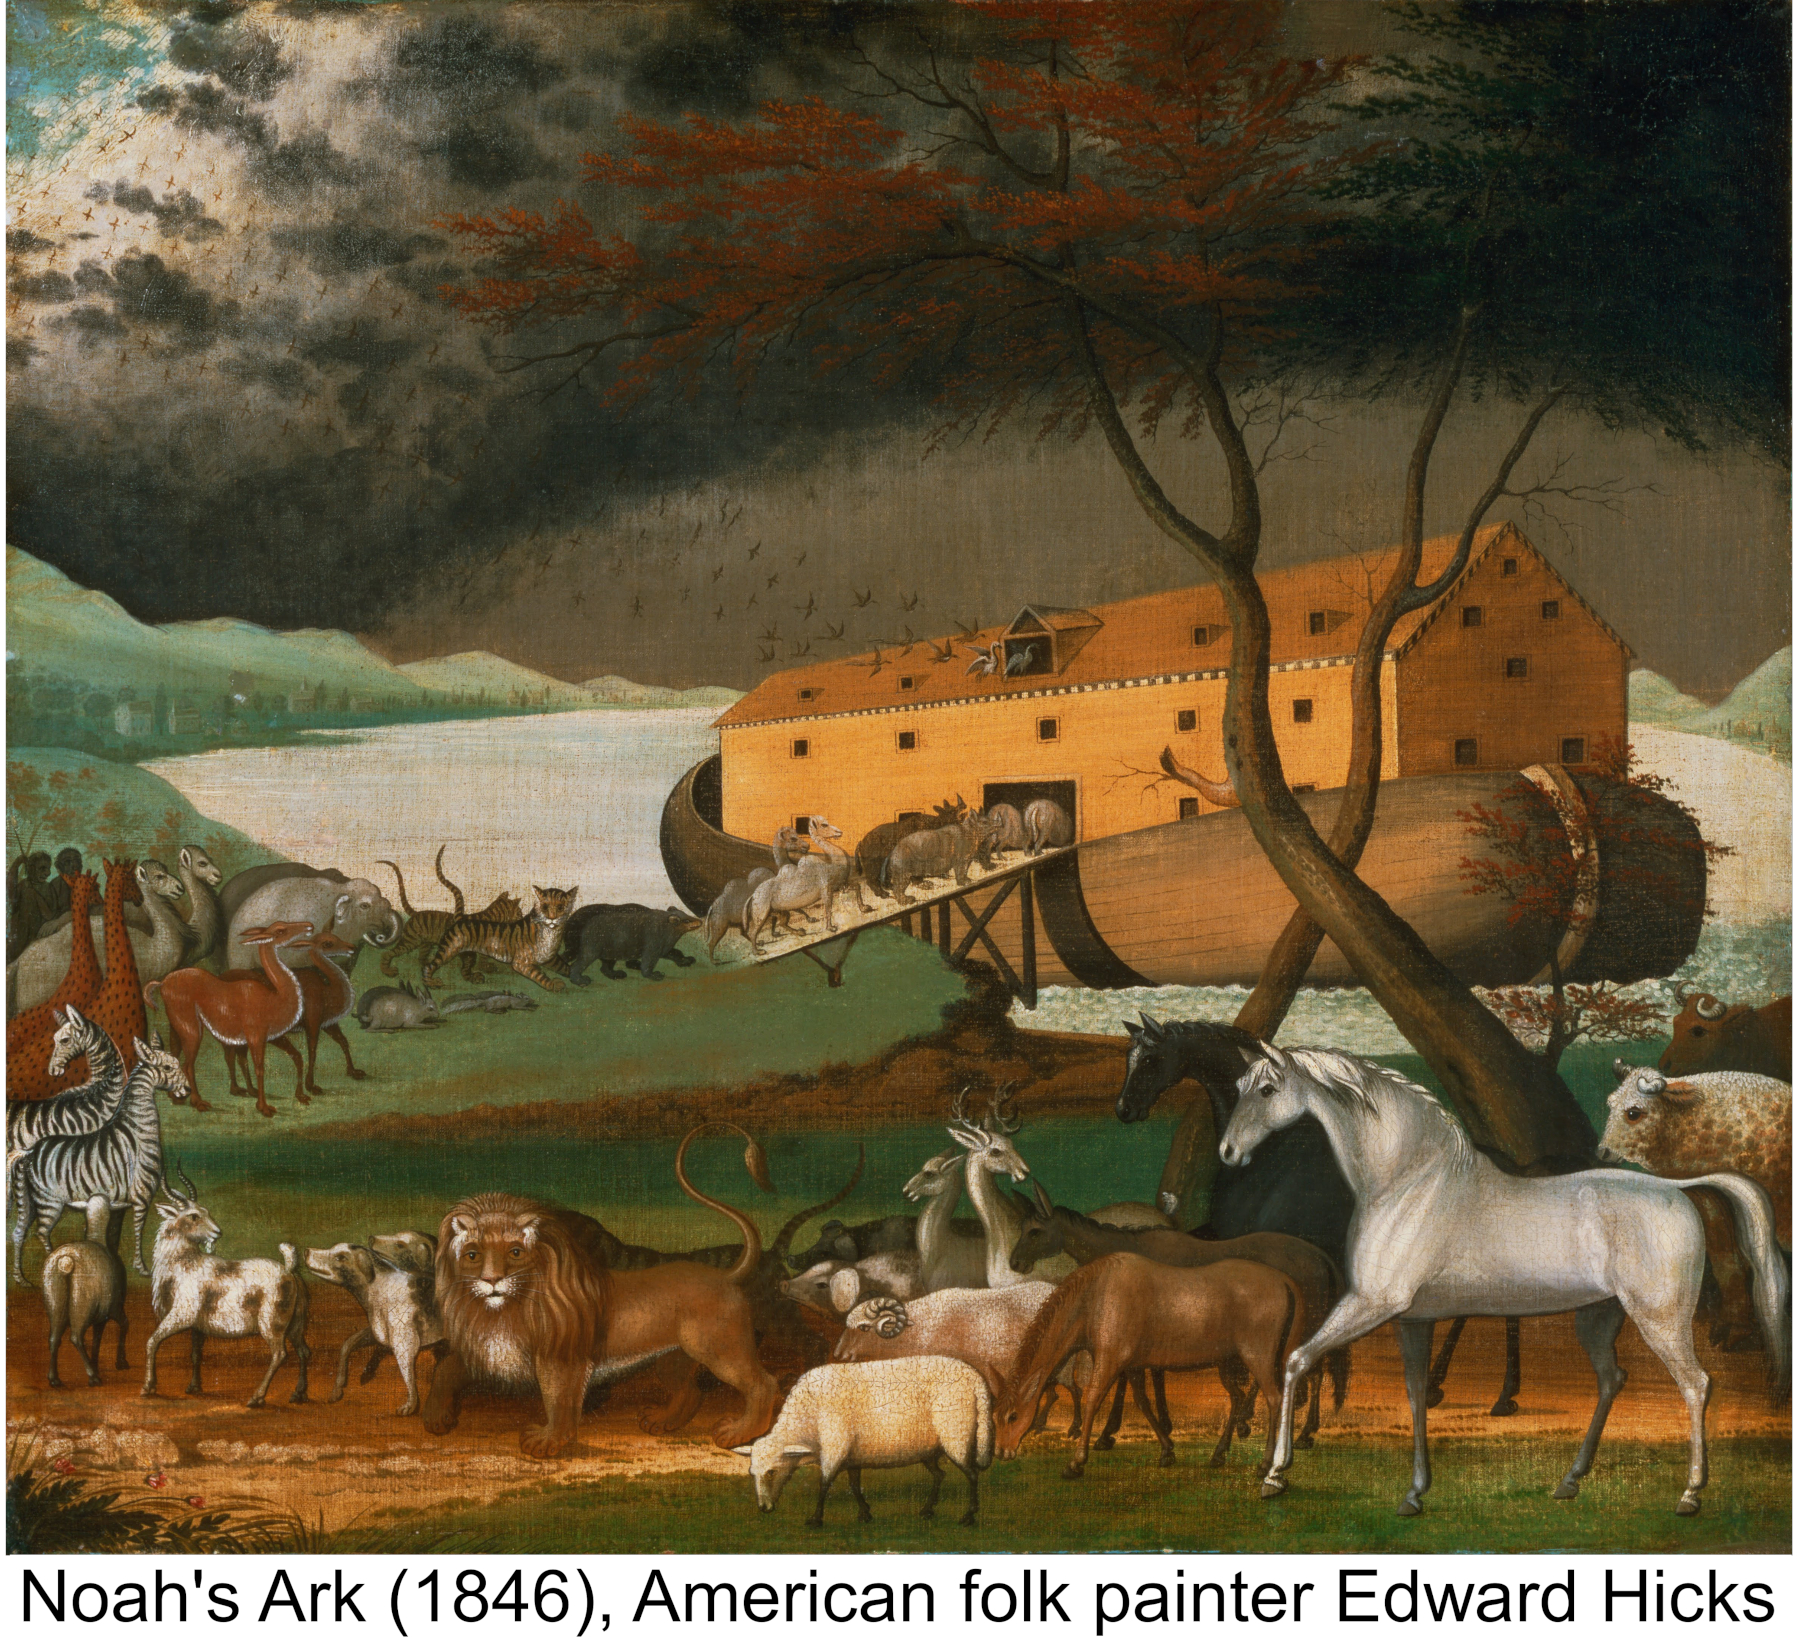 Noah's Ark (1846), by the American folk painter Edward Hicks